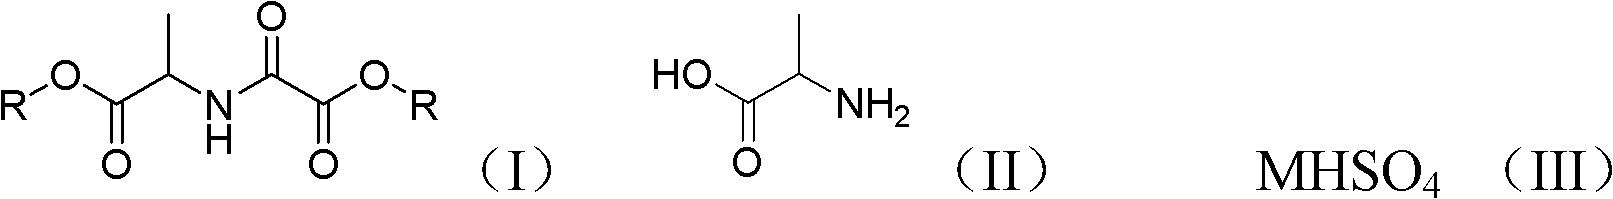 Chemical synthesis method of N-alcoxyloxalyl alanine ester